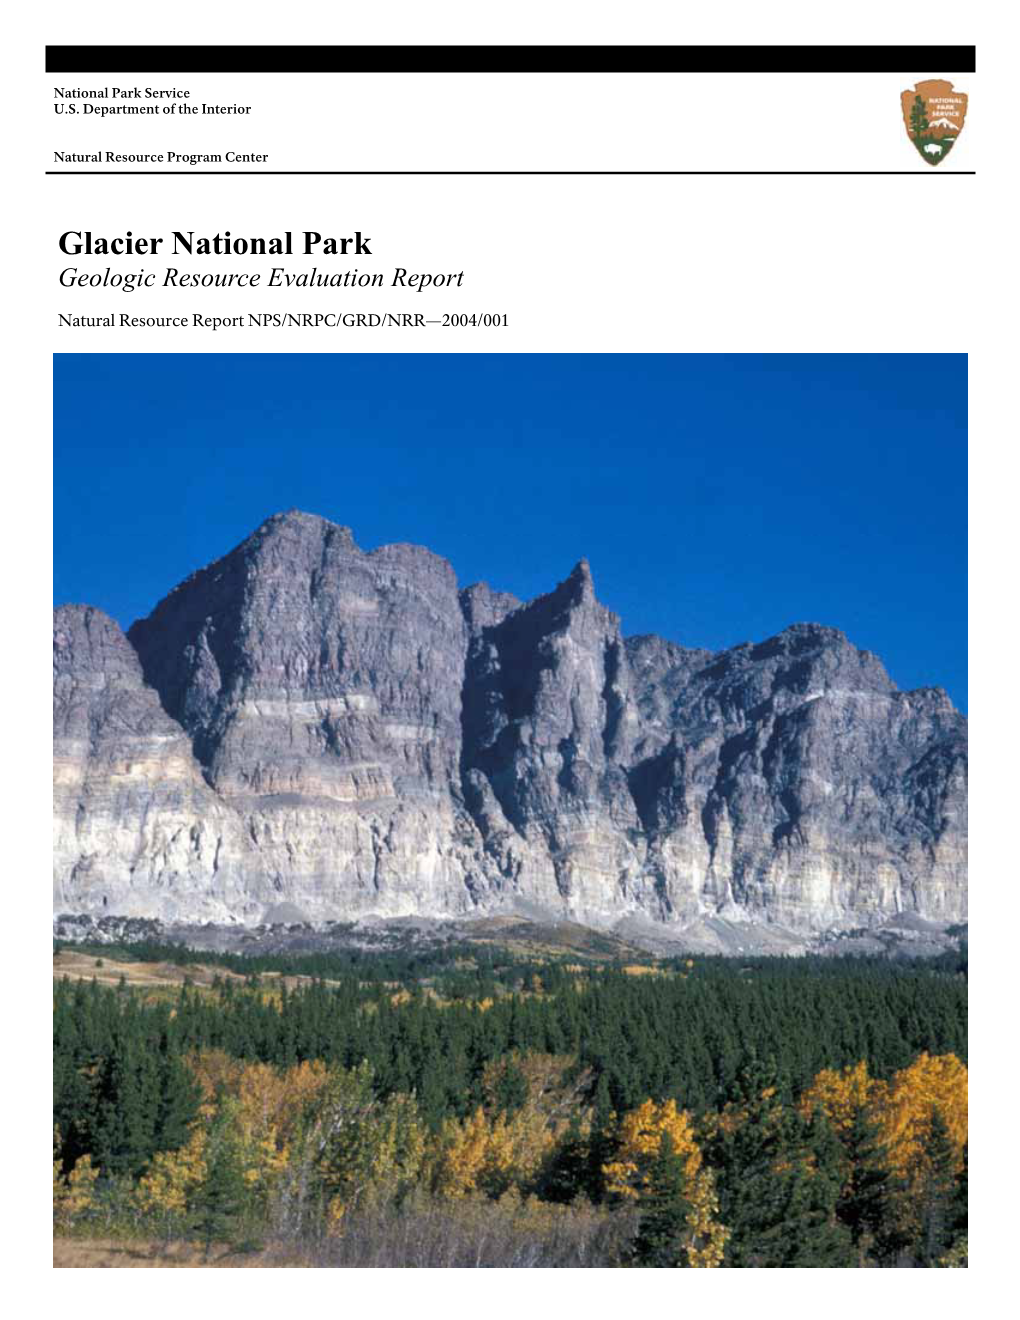 Geologic Resource Evaluation Report, Glacier National Park